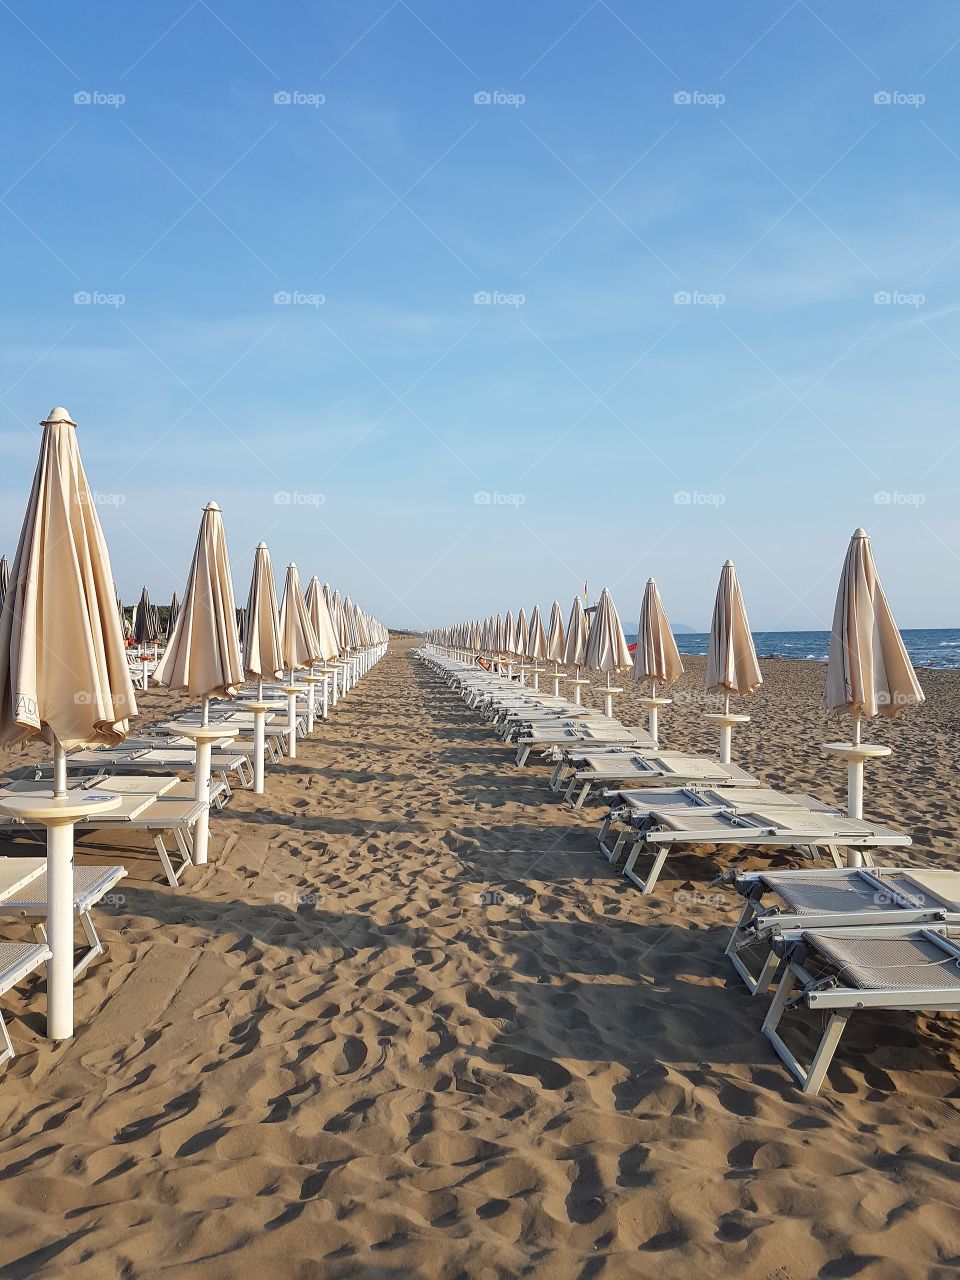 Sandy beach with rows of sun umbrellas in summer